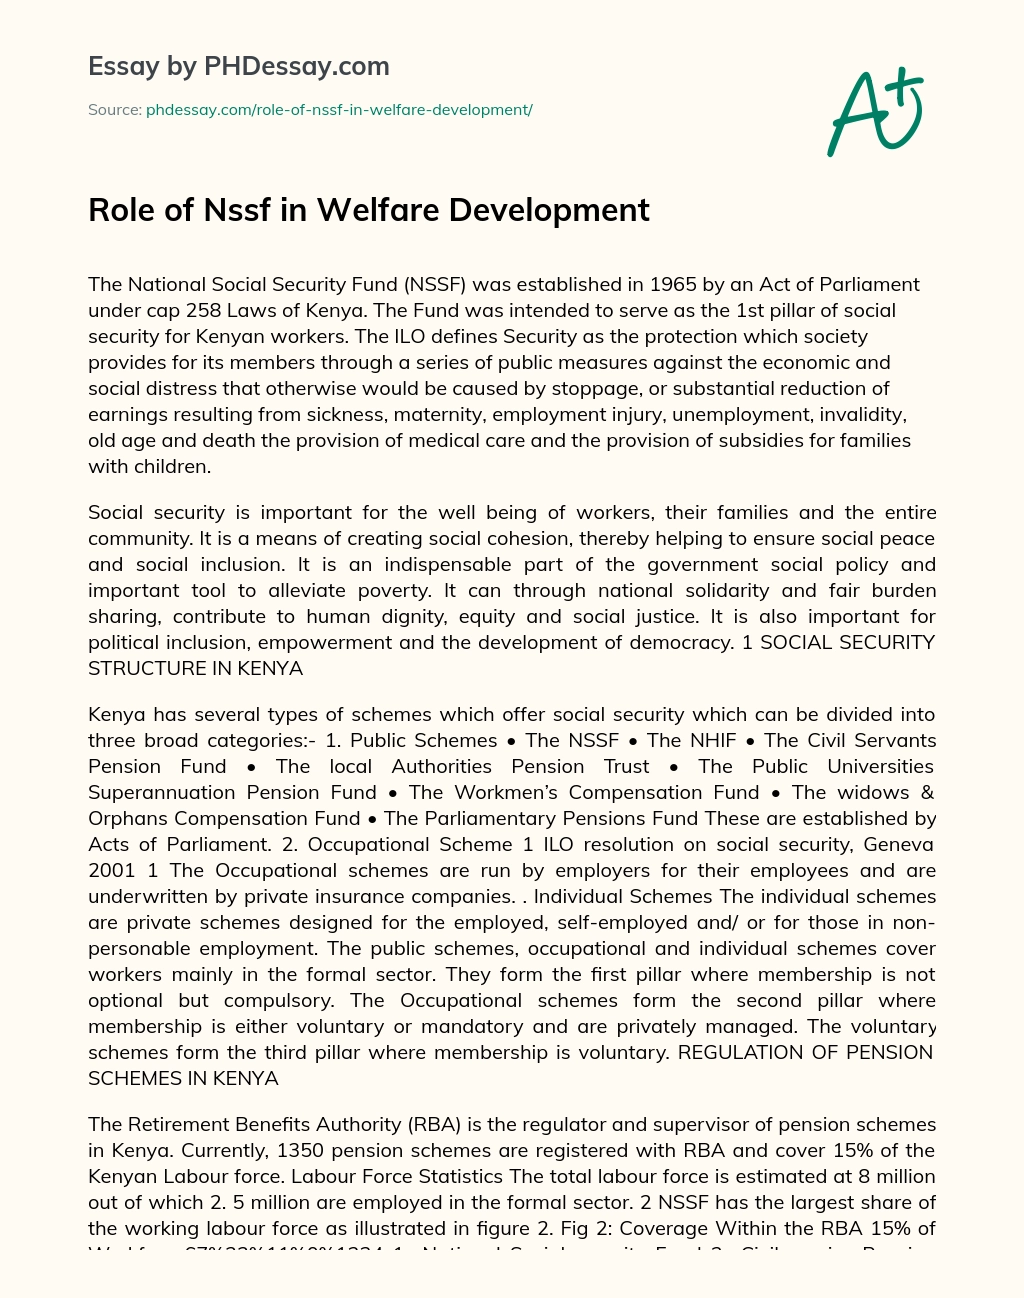 Role of Nssf in Welfare Development essay